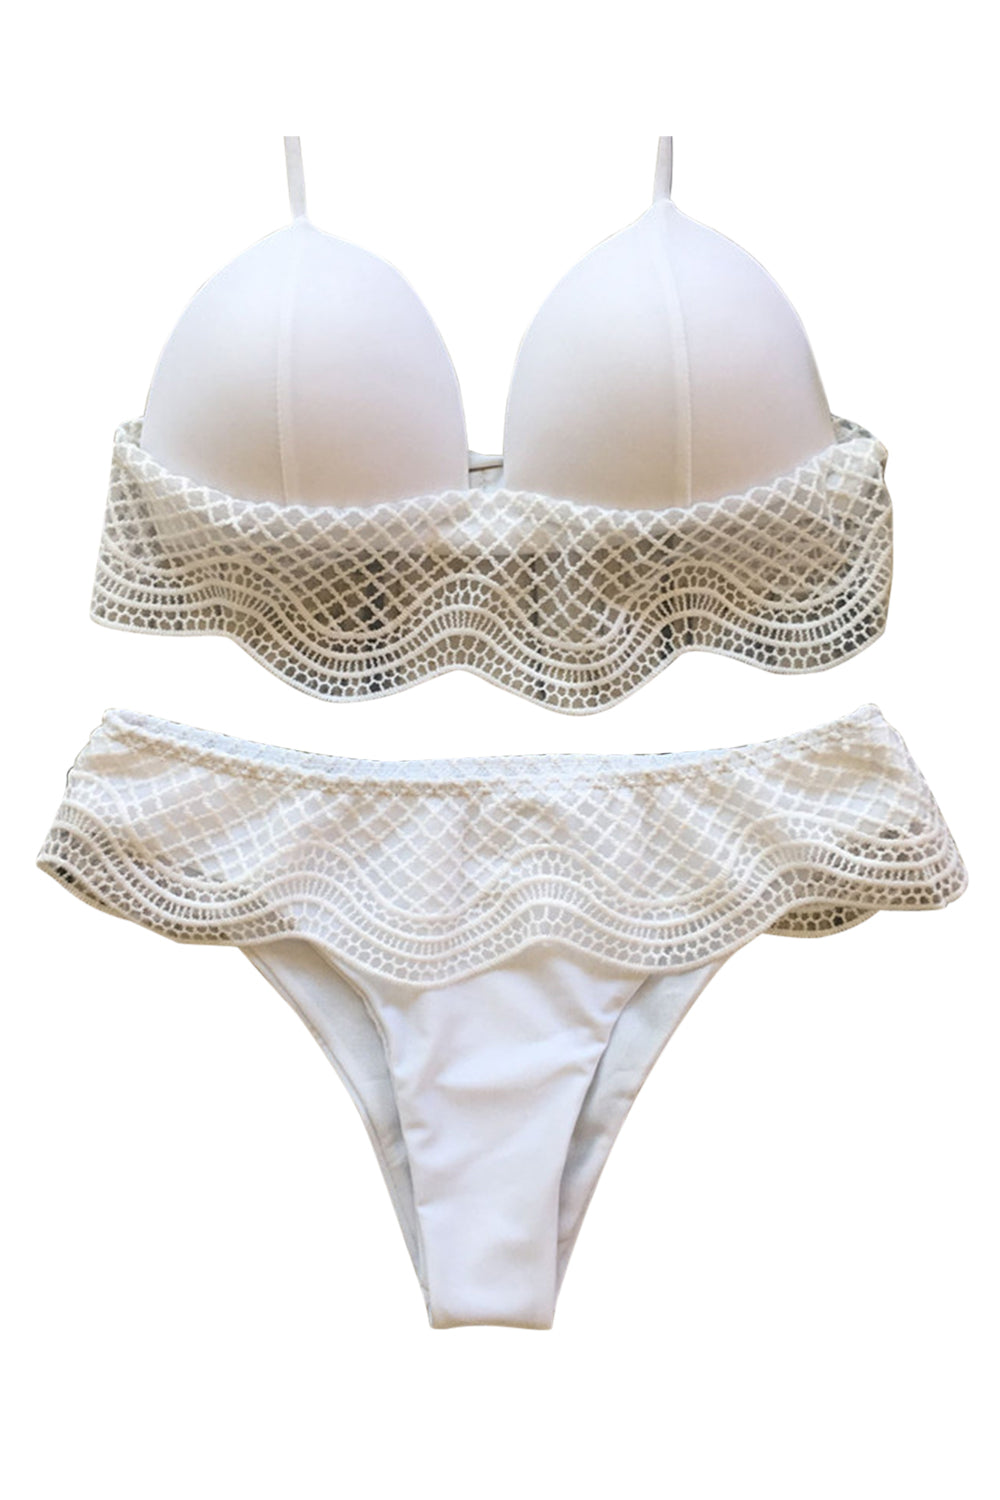 Iyasson White Crochet Lace Trim Bikini Set